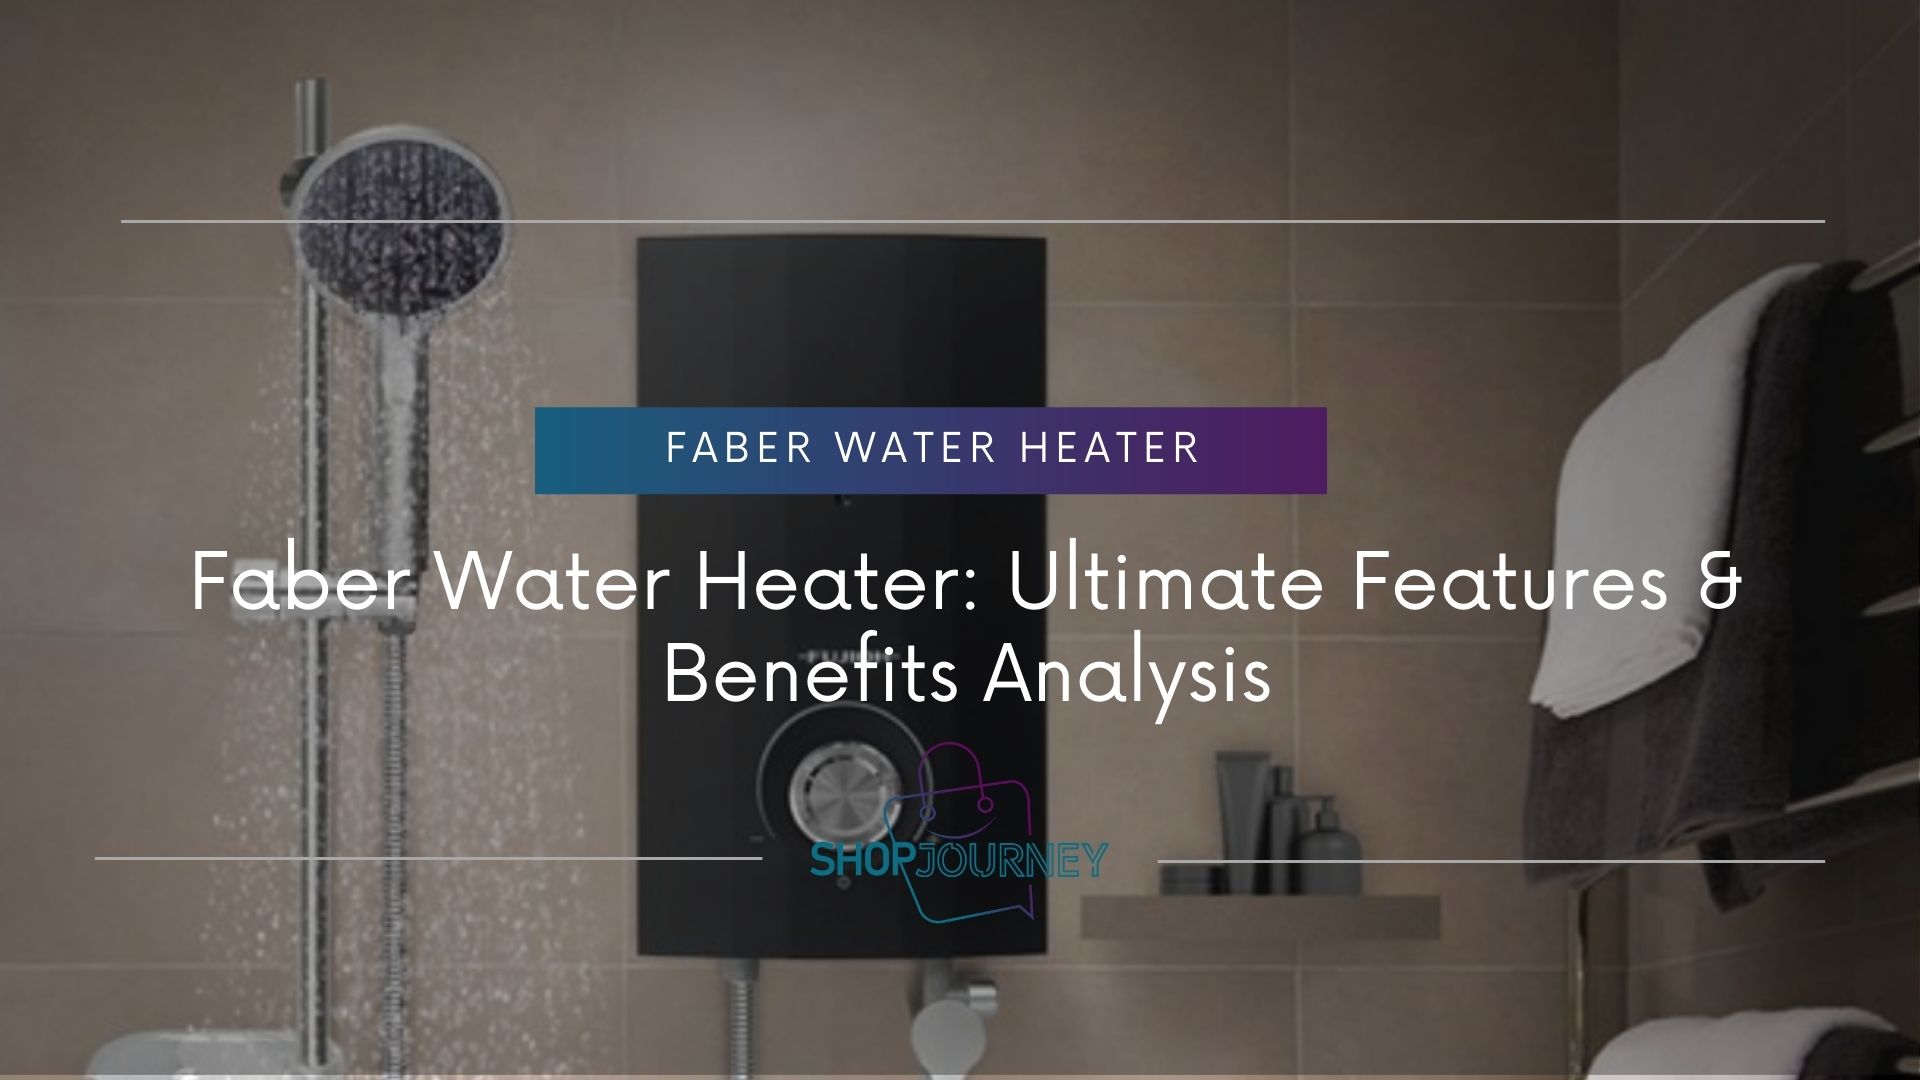 Faber Water Heater - Shop Journey